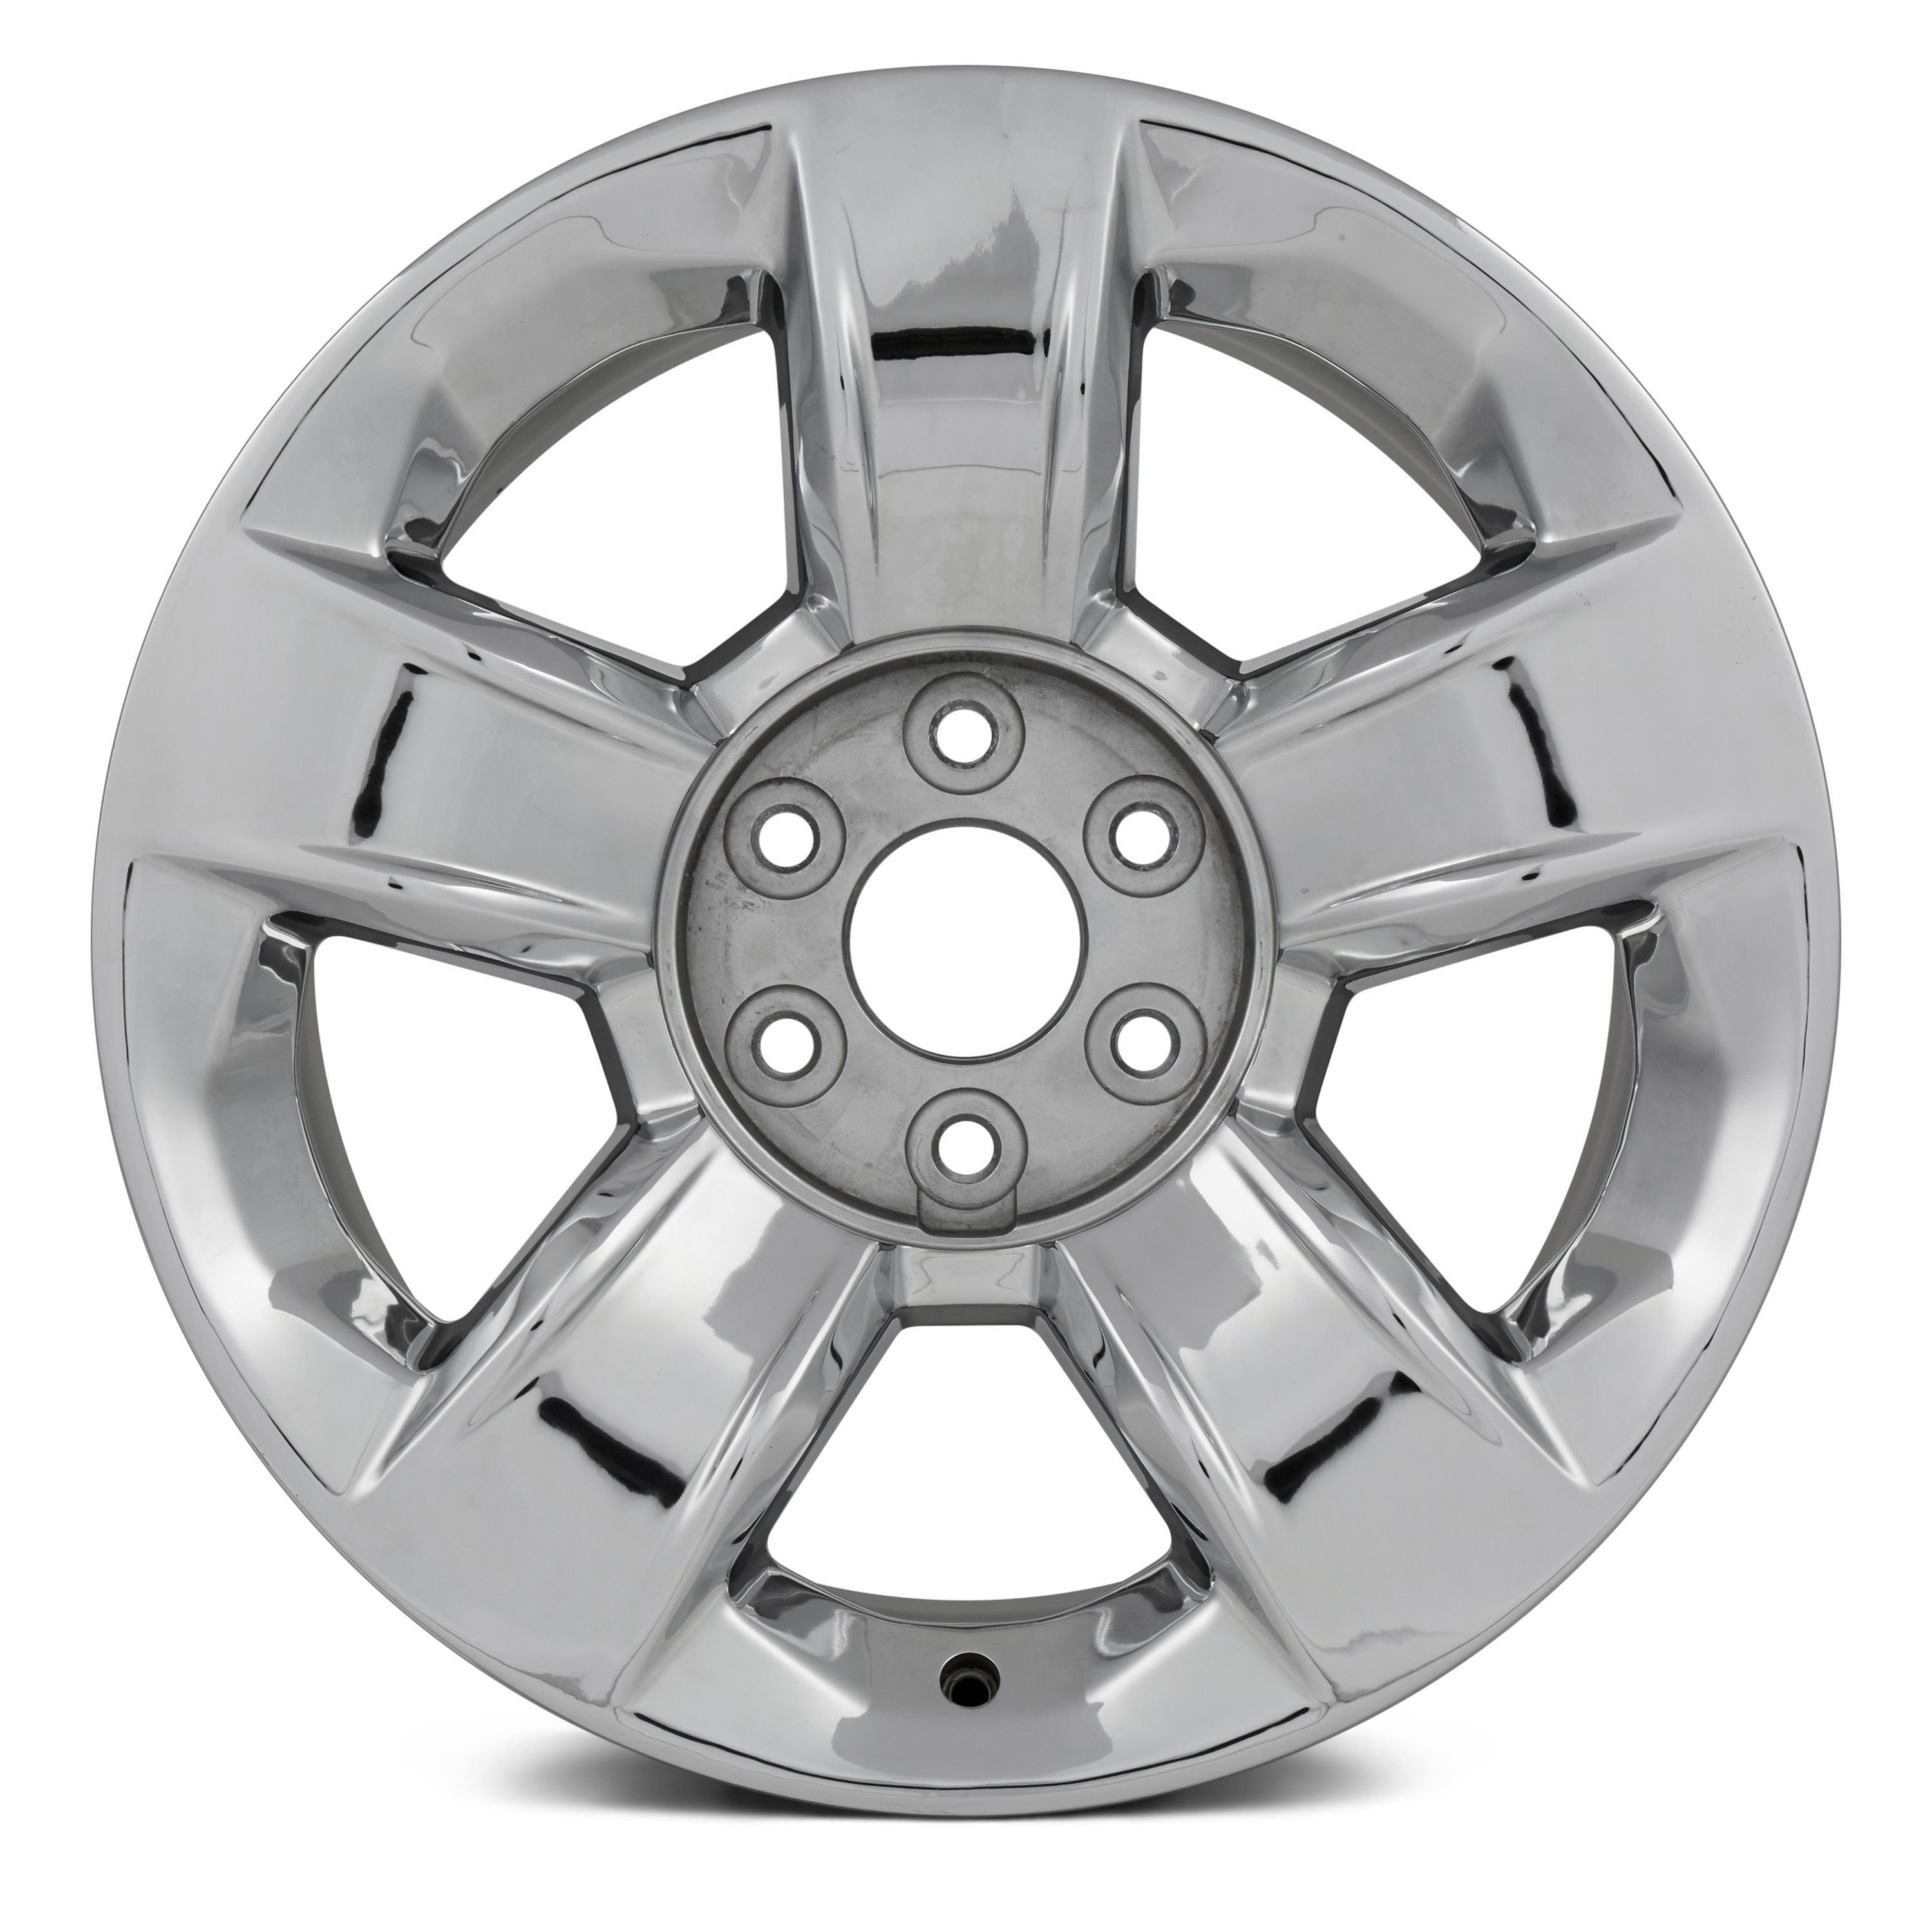 PartSynergy Aluminum Alloy Wheel Rim 20 Inch OEM Take Off Fits 2014-2018 GMC Sierra 1500 6-139 Tires For A 2014 Gmc Sierra 1500